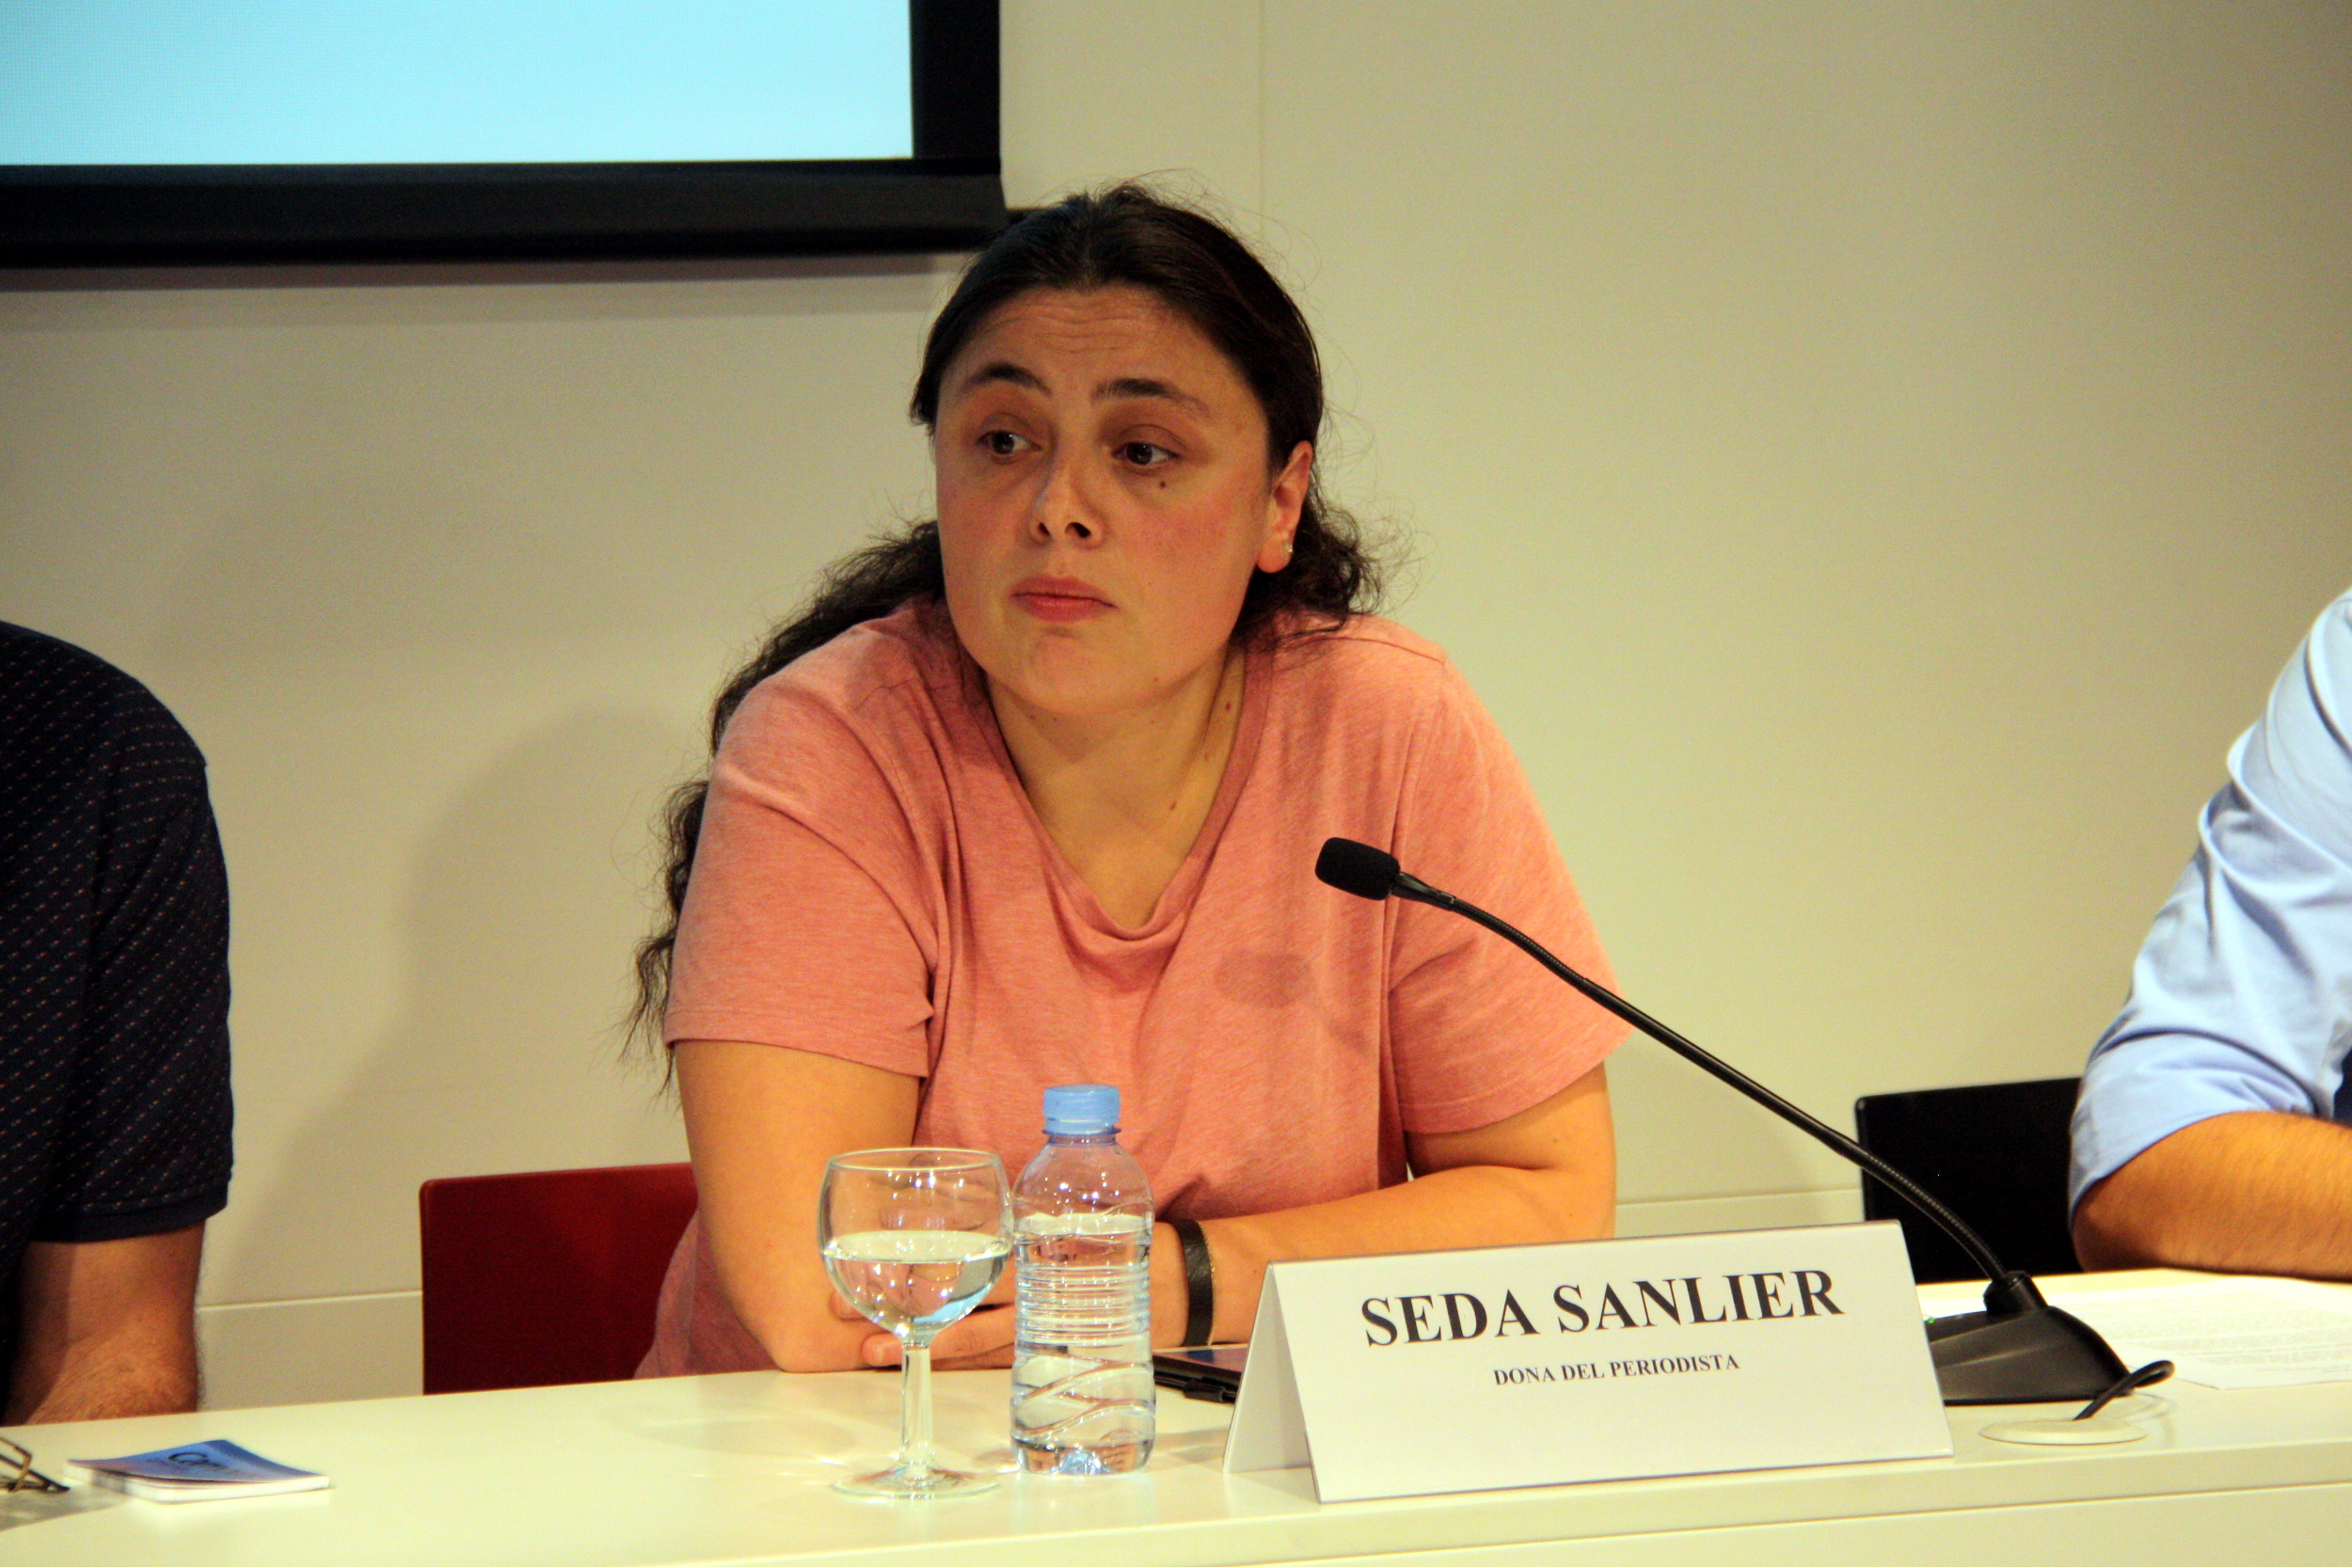 Seda Sanlier, journalist Hamza Yalçin's wife, speaks for his release (by ACN)